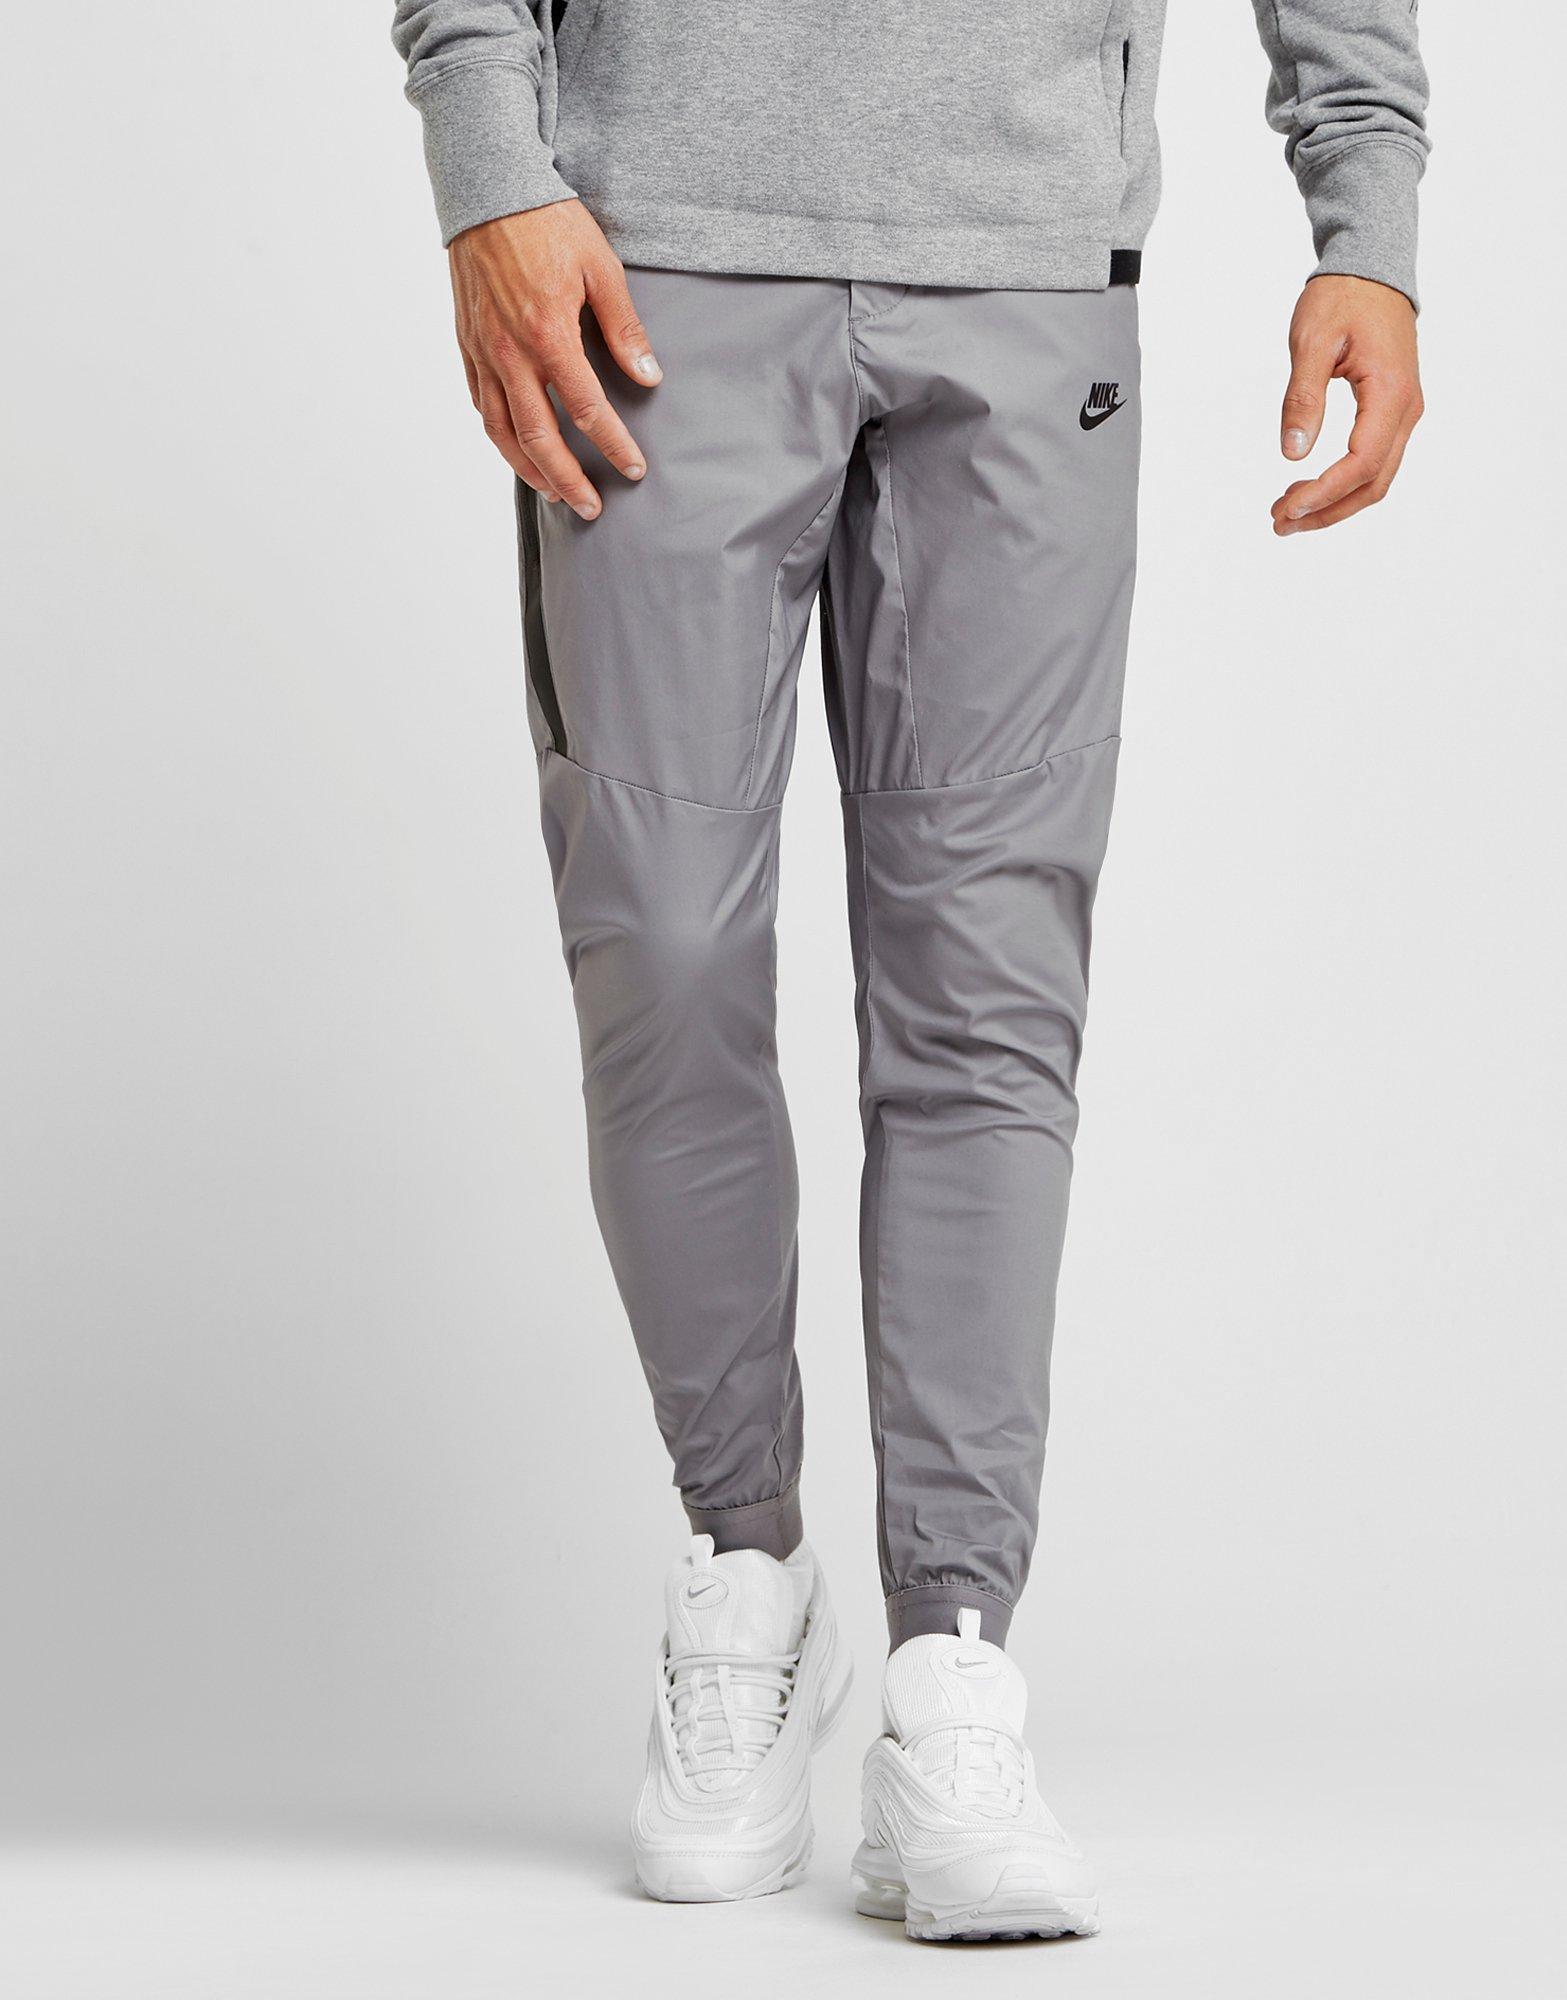 Nike Cotton Tech Woven Bonded Pants in 